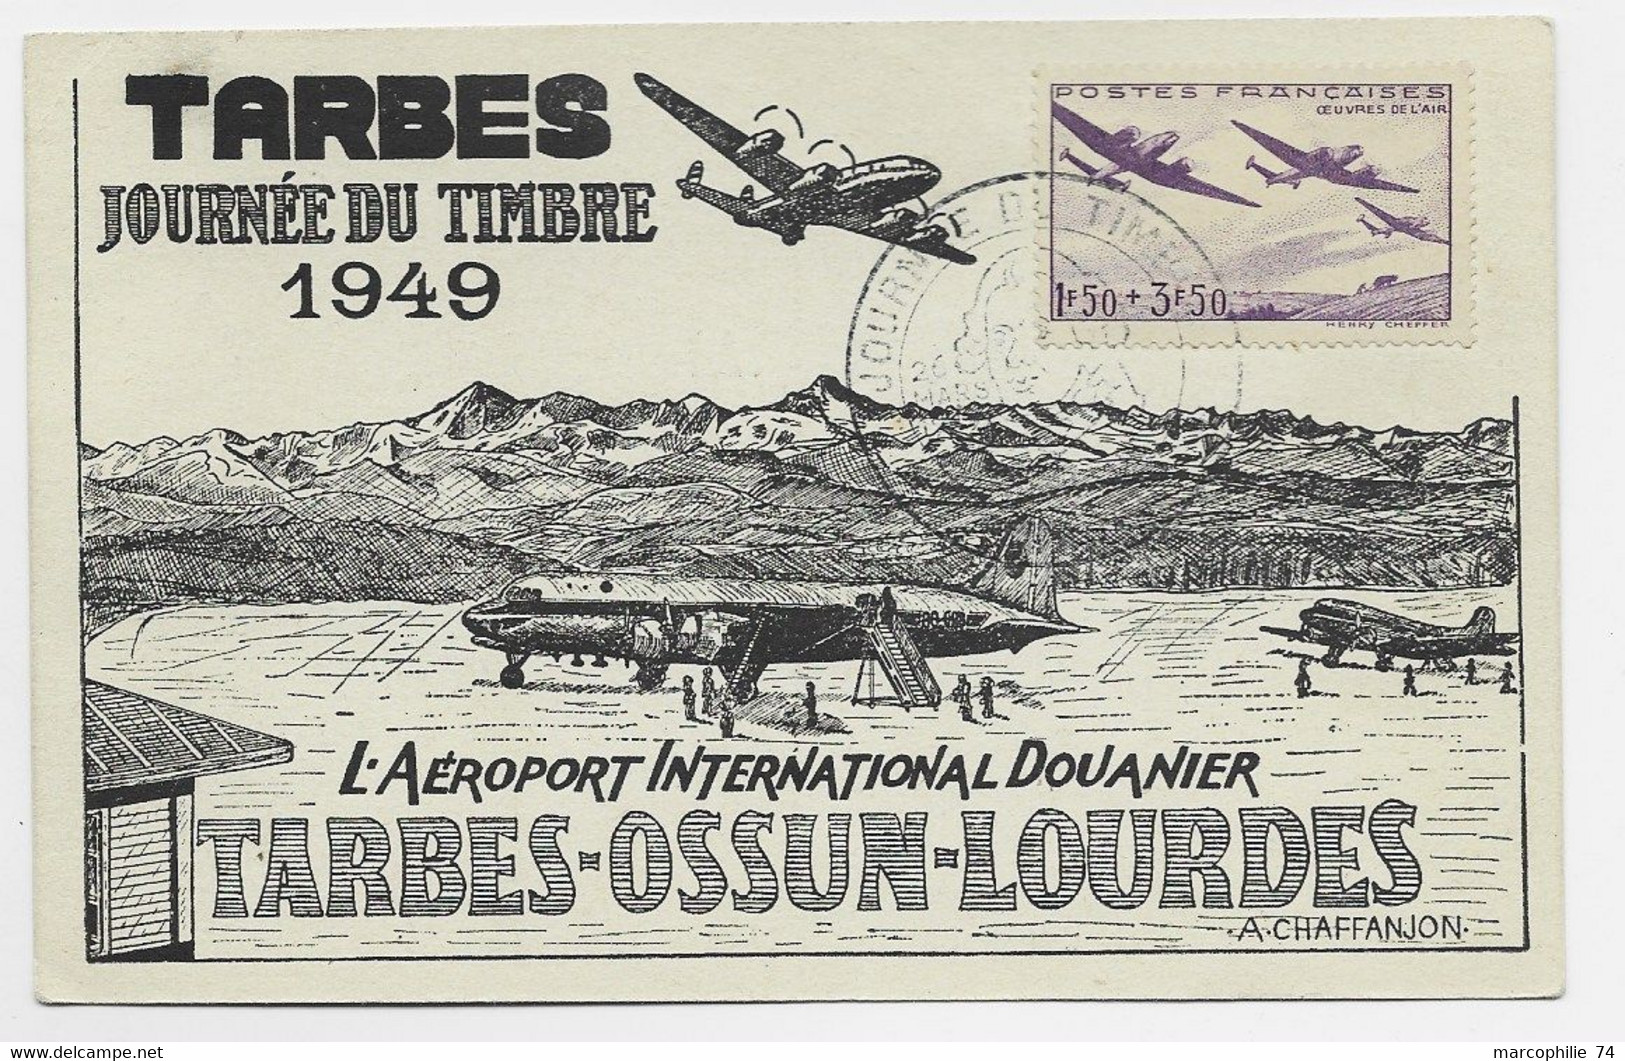 N° 540 CARTE SPECIALE JOURNEE DU TIMBRE TARBES 1949 AEROPORT DOUANIER TARBES OSSUN LOURDES - Commemorative Postmarks